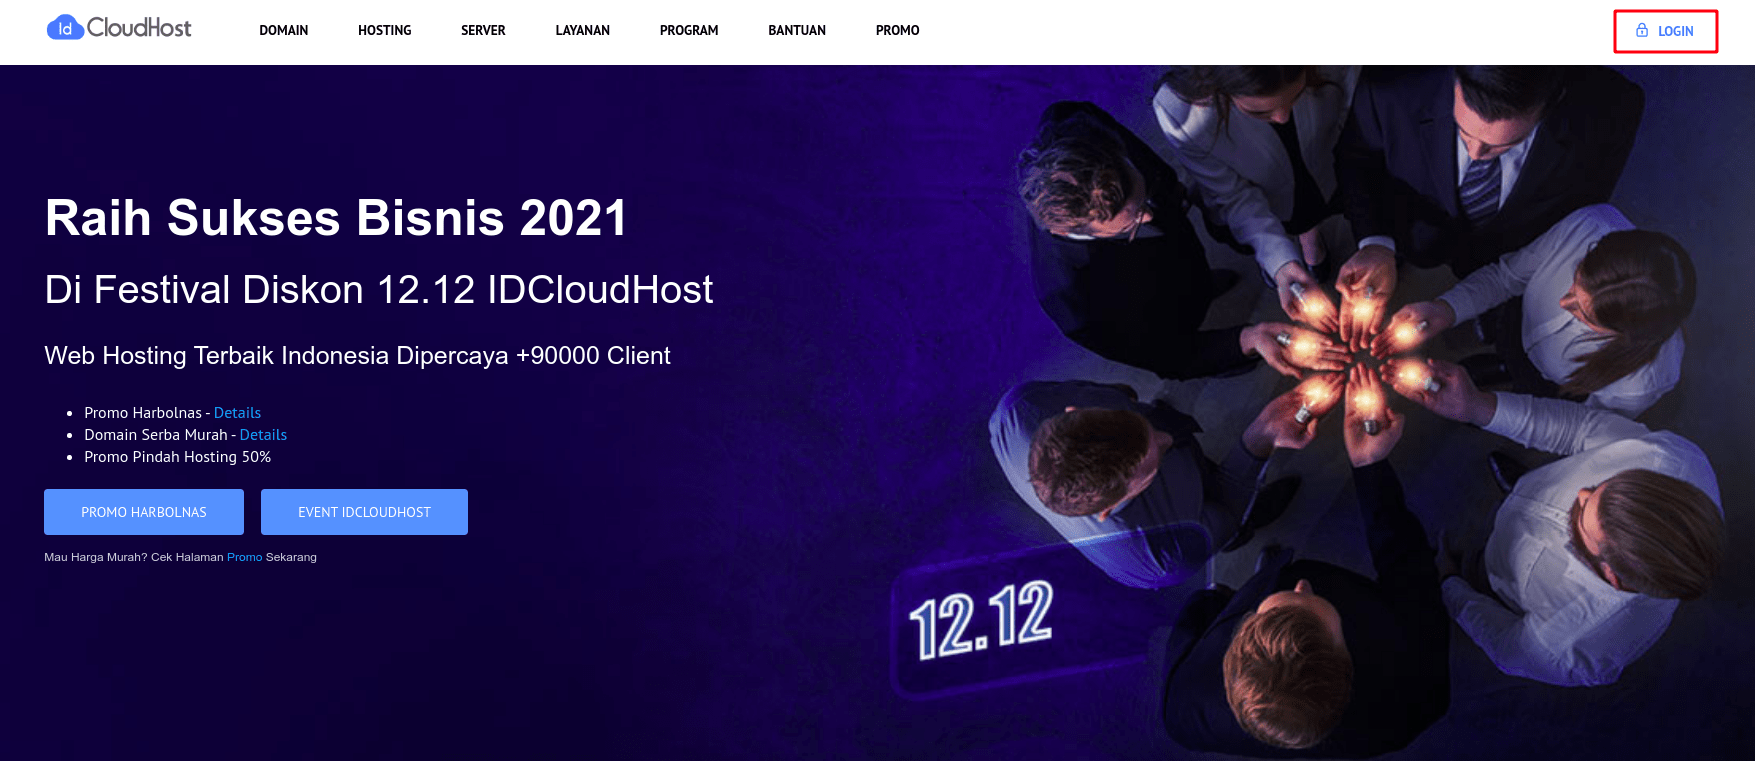 Homepage idcloudhost 2020